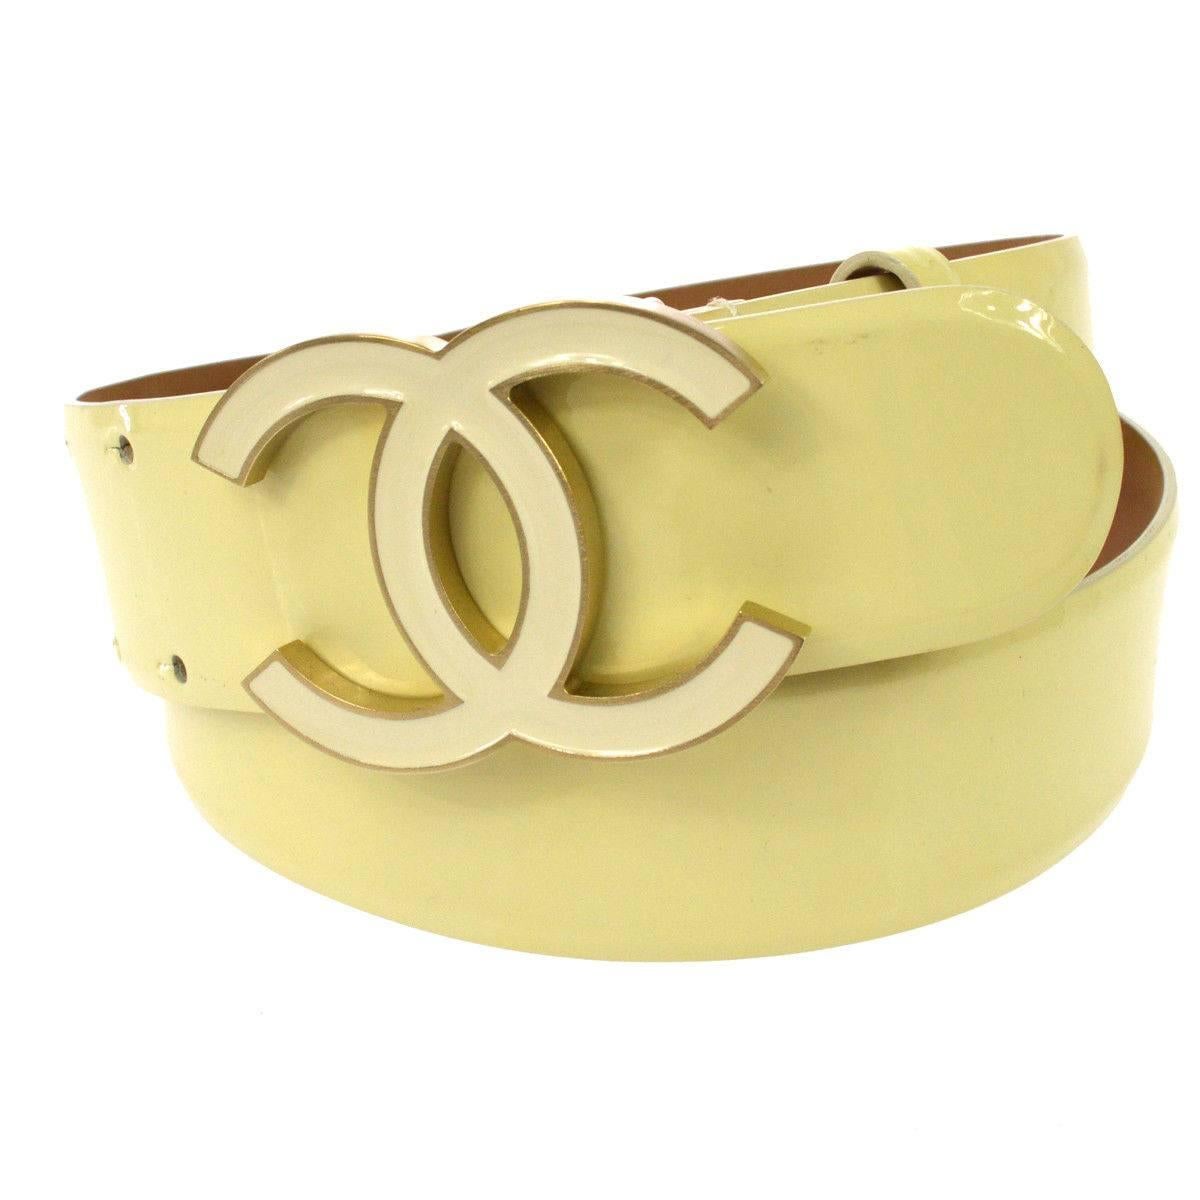 Chanel Cream Nude Gold CC Patent Leather Evening Waist Belt